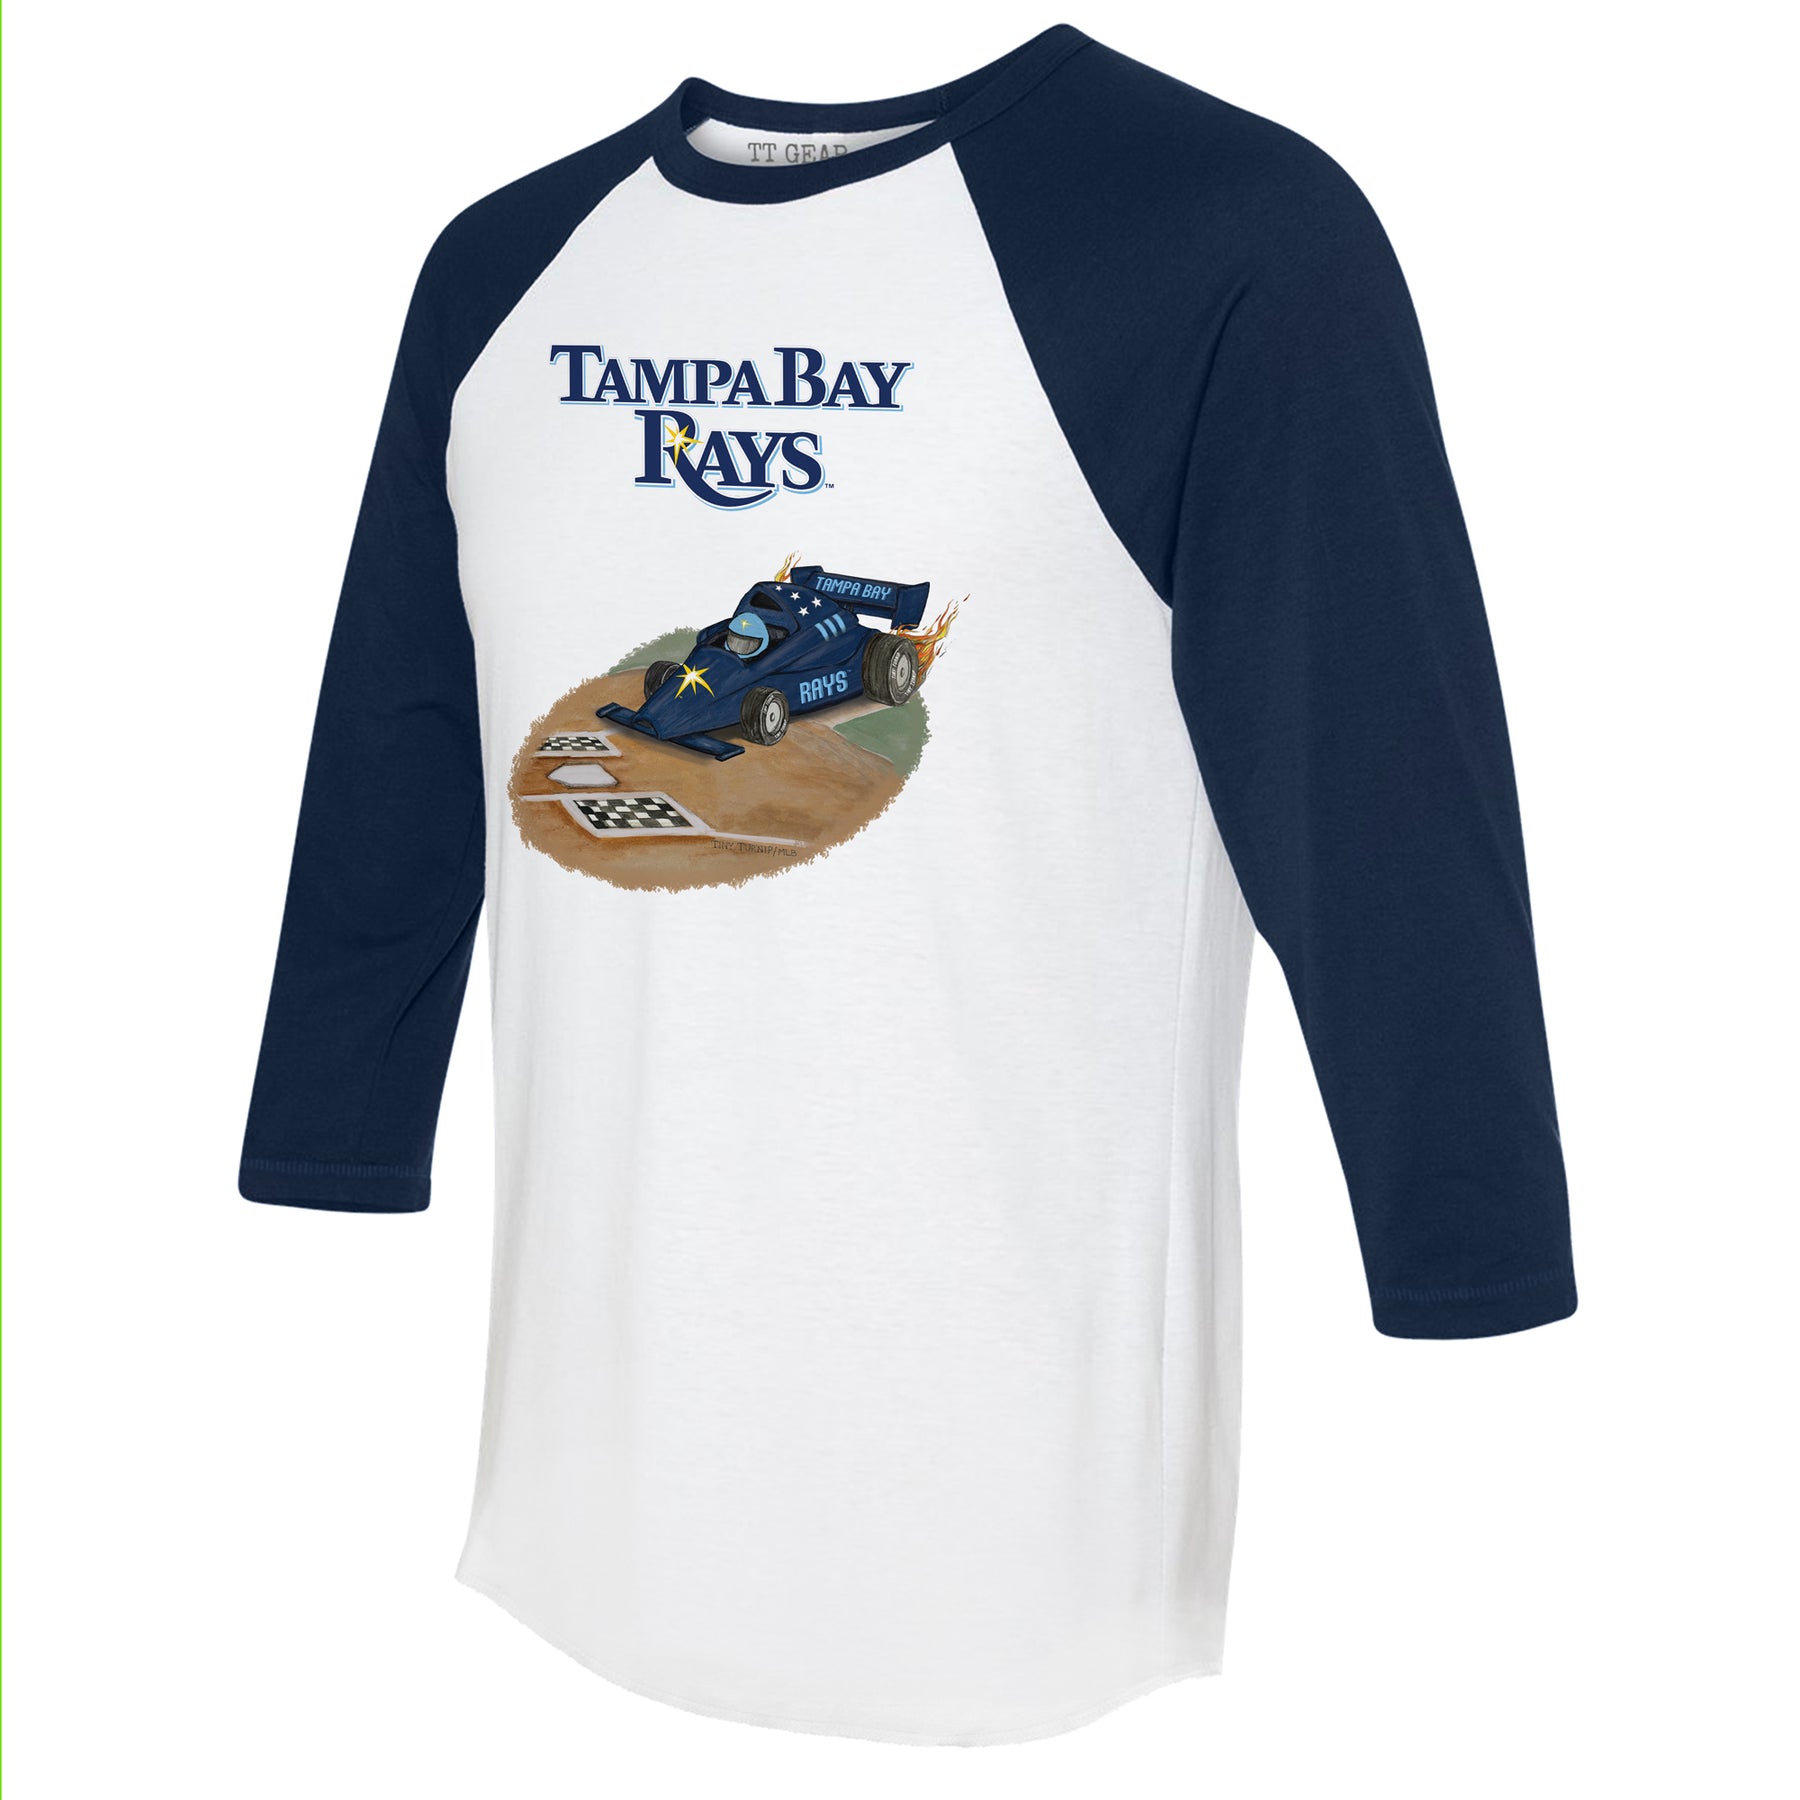 Tampa Bay Rays Race Car 3/4 Navy Blue Sleeve Raglan